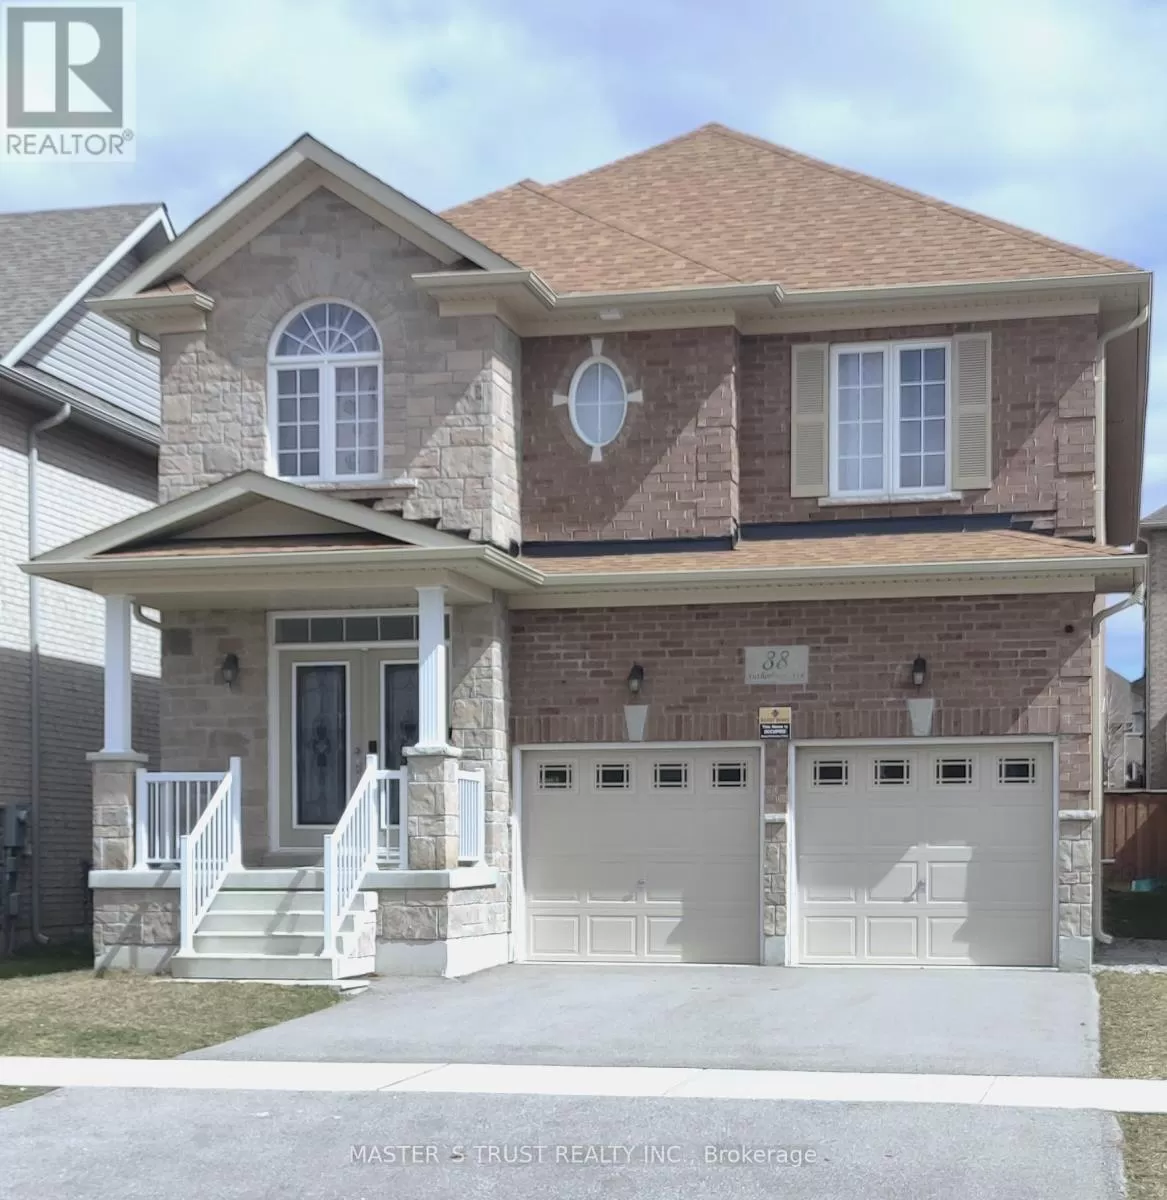 House for rent: 88 Sutherland Avenue W, Bradford West Gwillimbury, Ontario L3Z 4H4